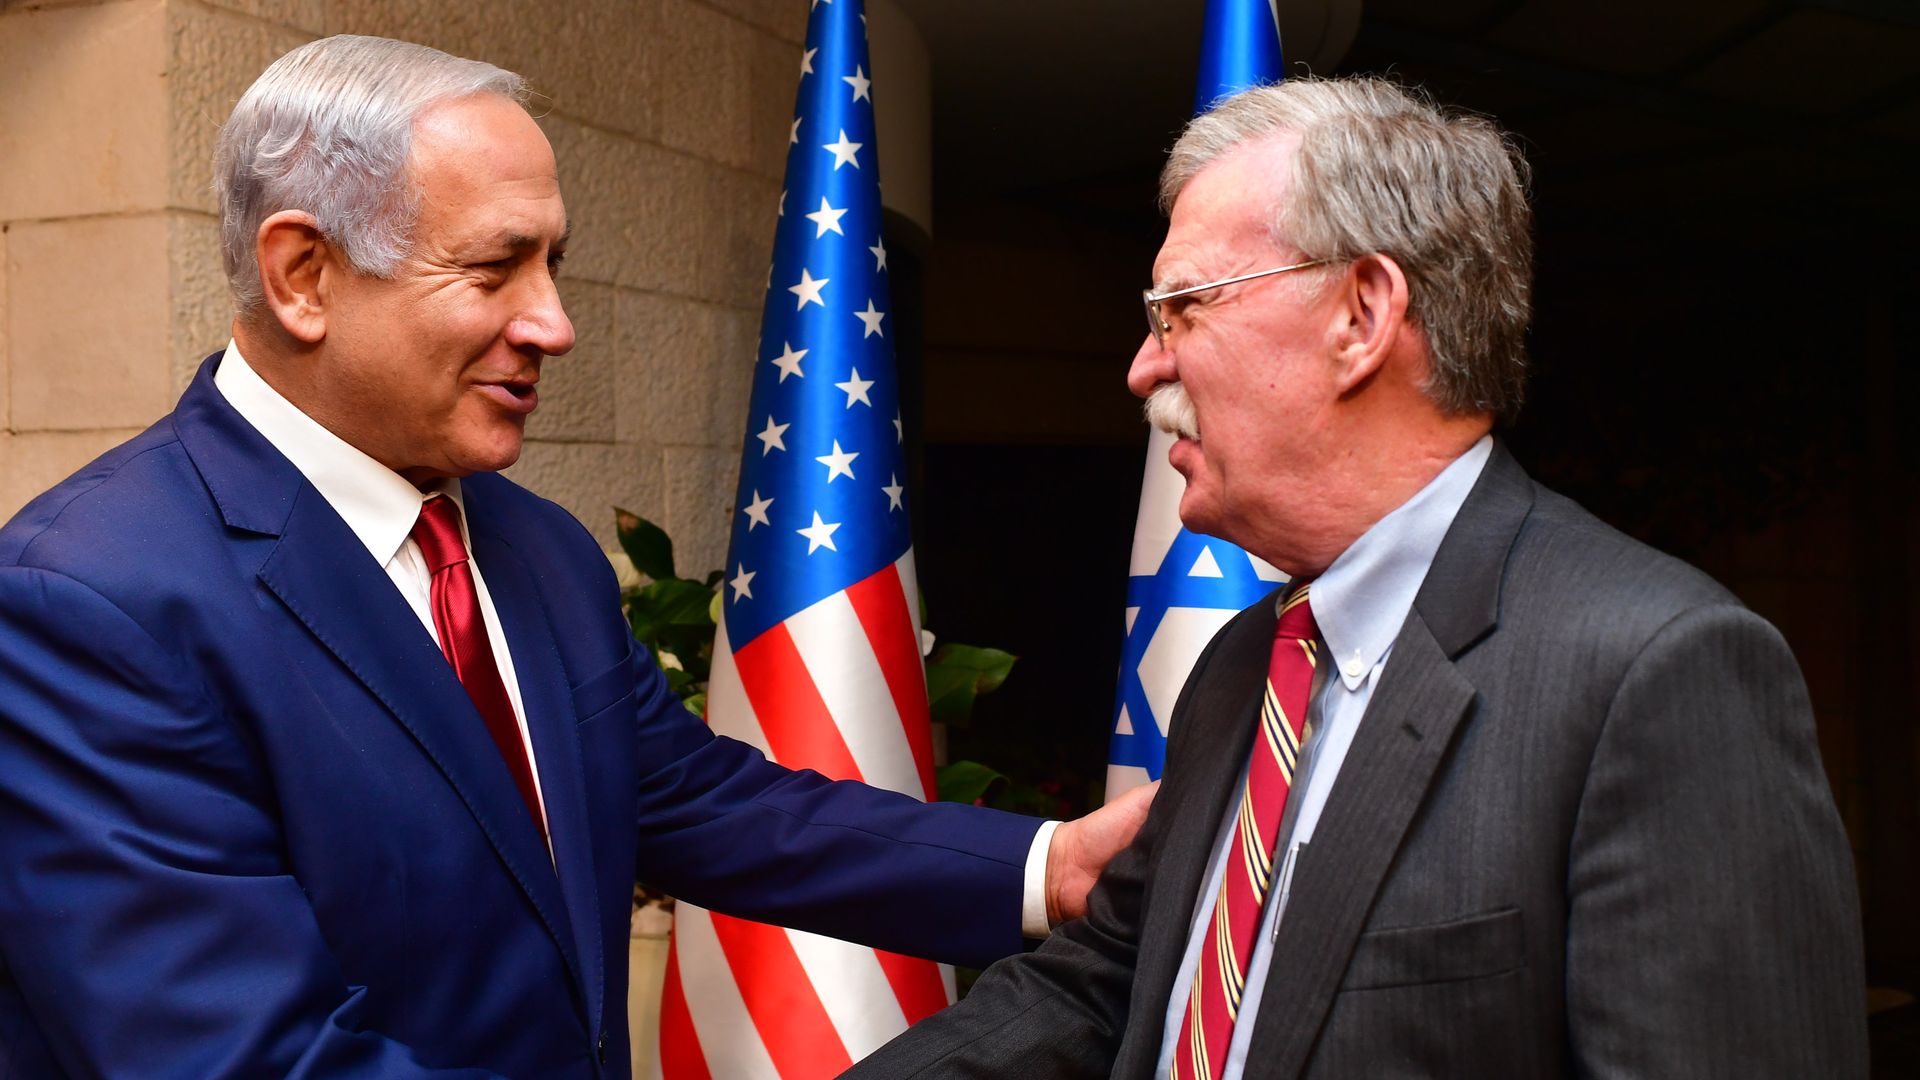 John Bolton shaking hands with Netanyahu